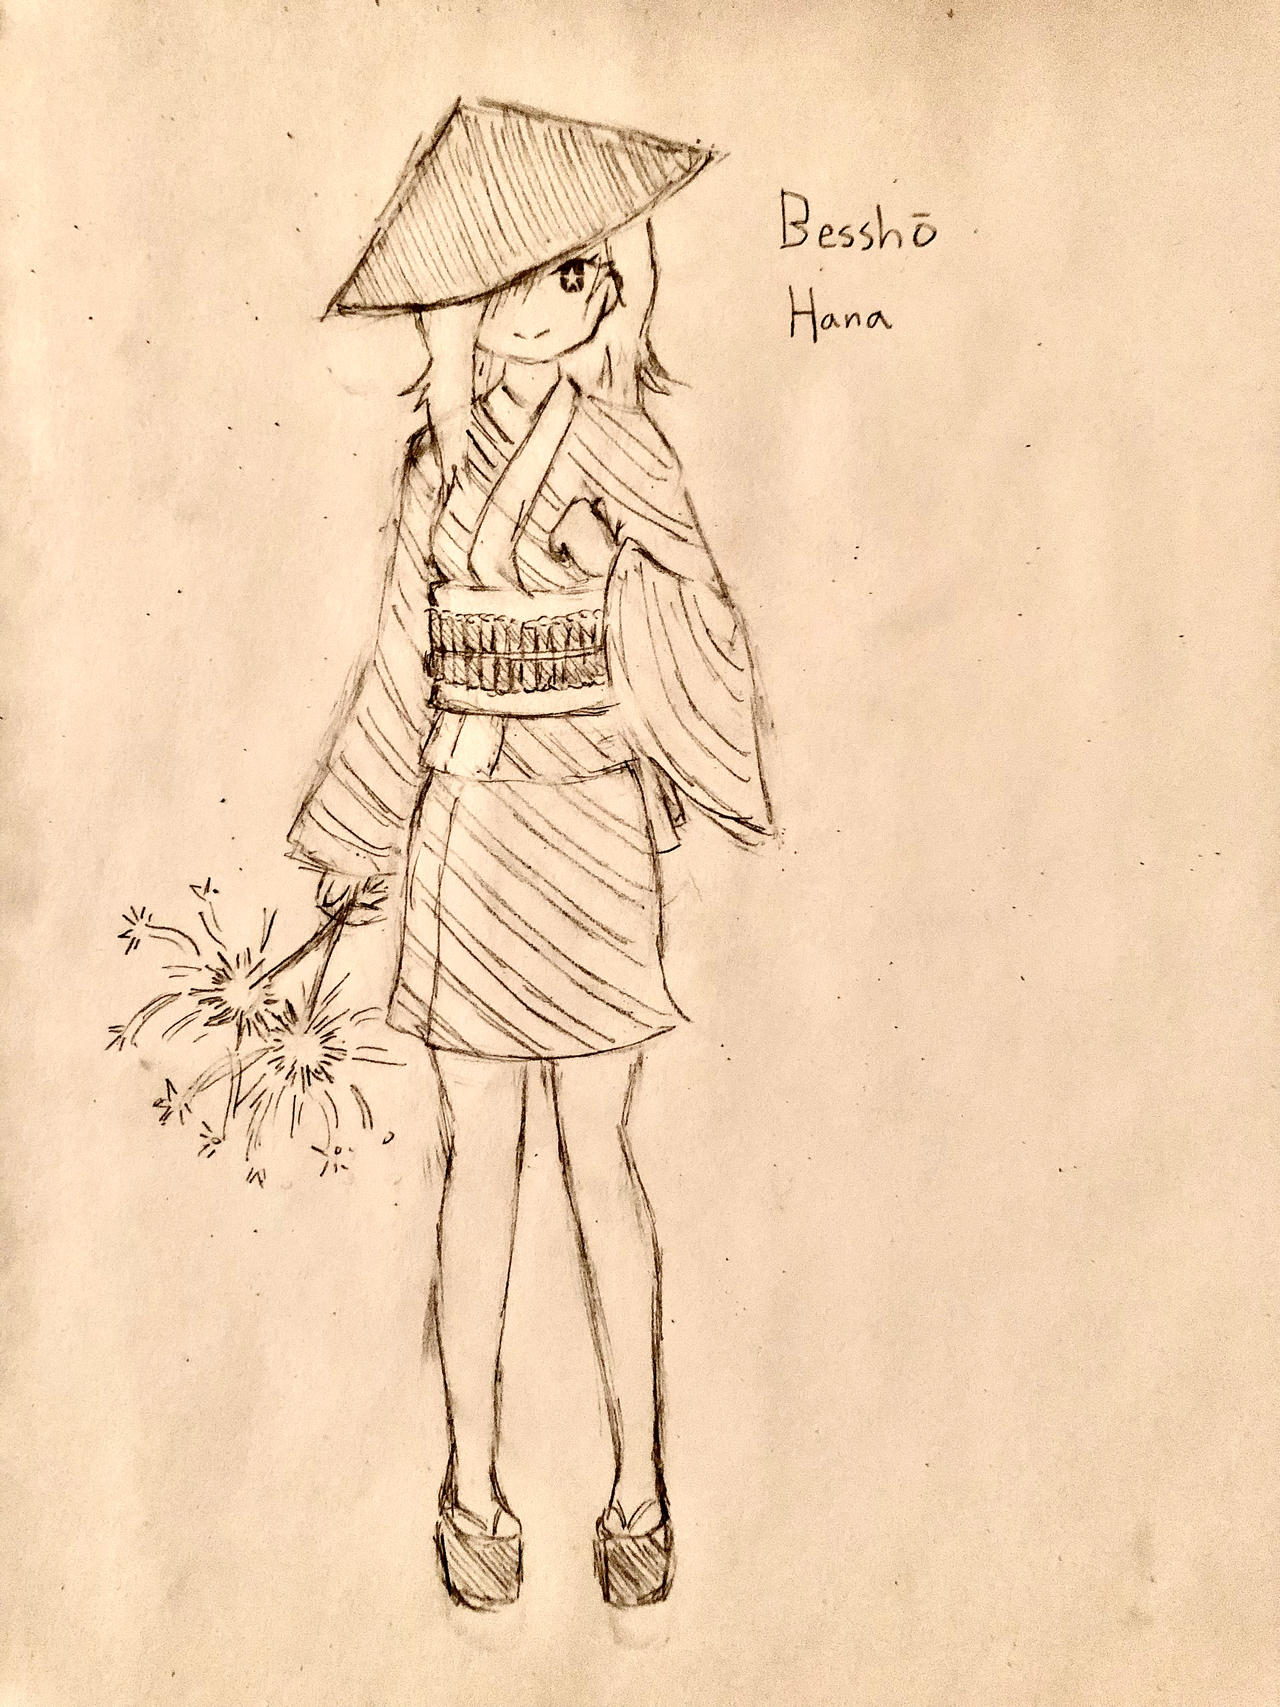 Bessho Hana, fireworks magical girl